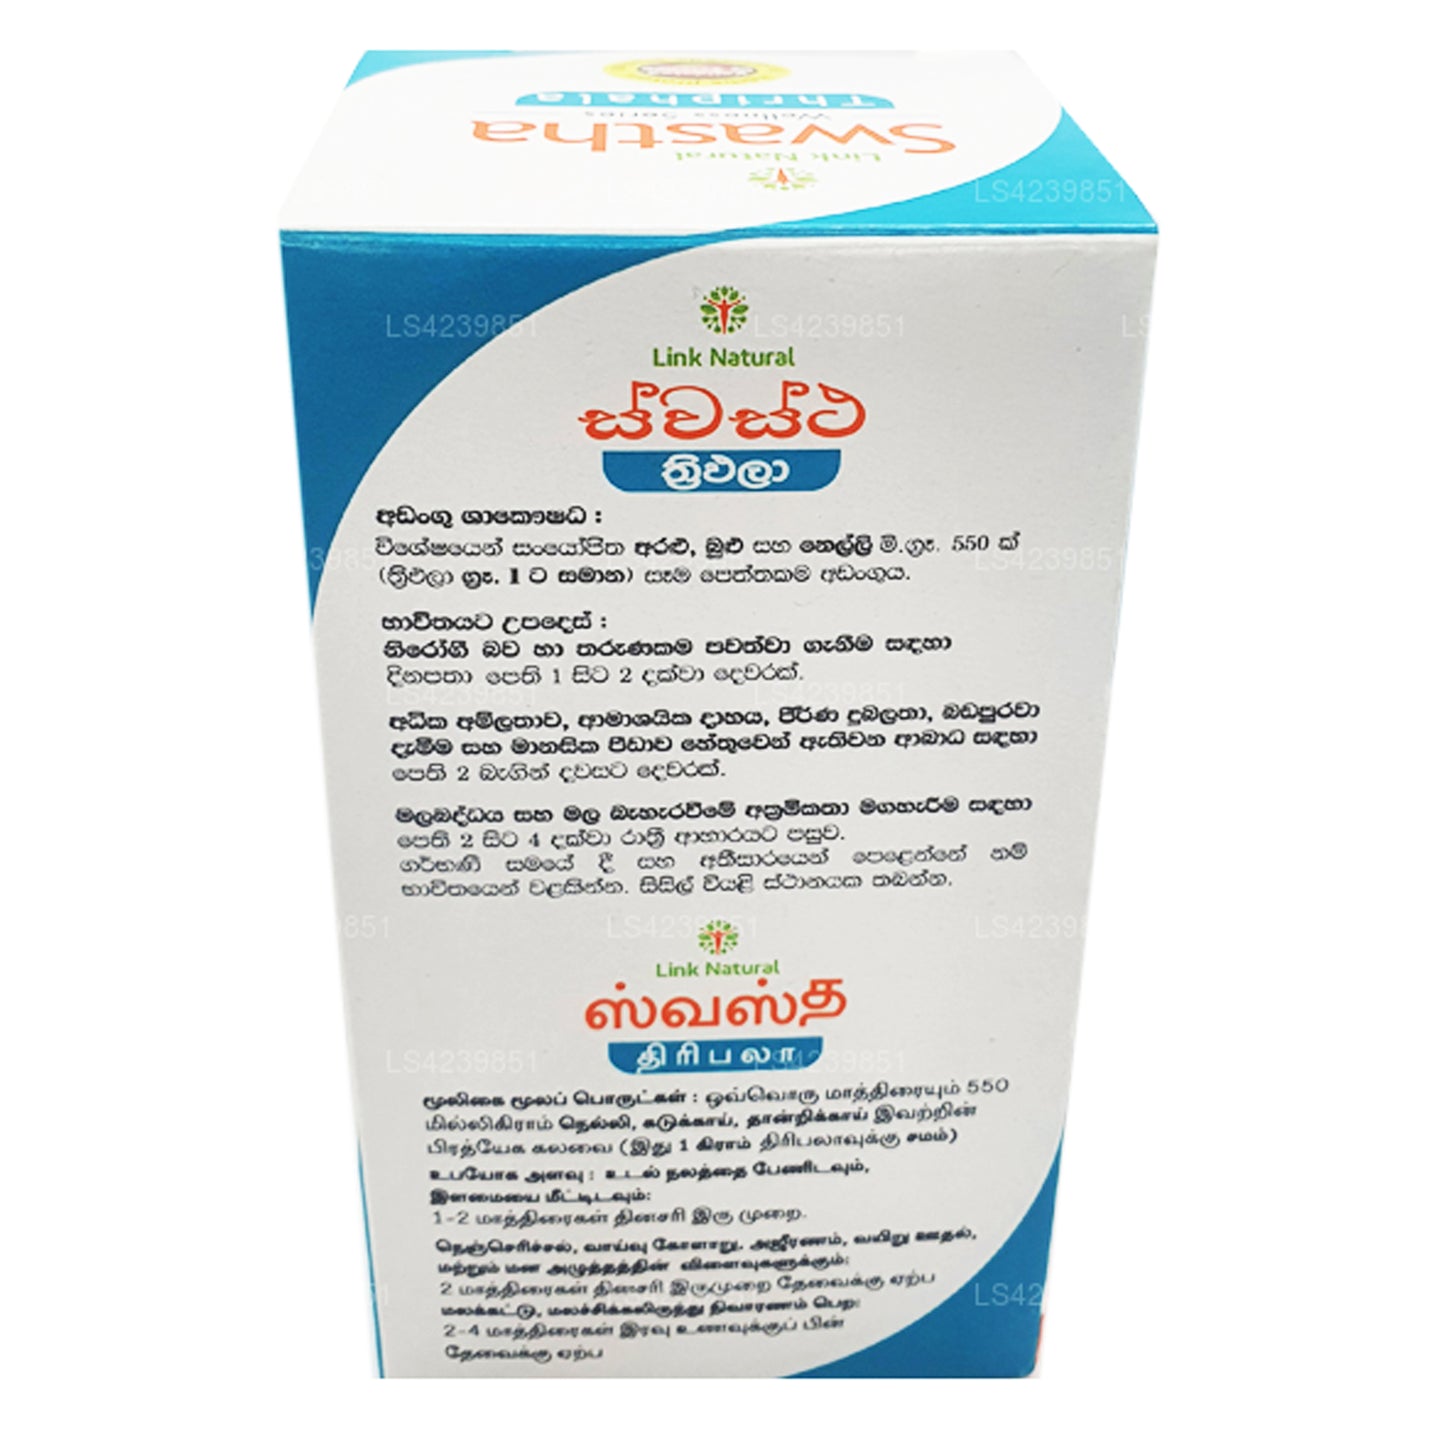 Link Swastha Thriphala (30 Tabletten)